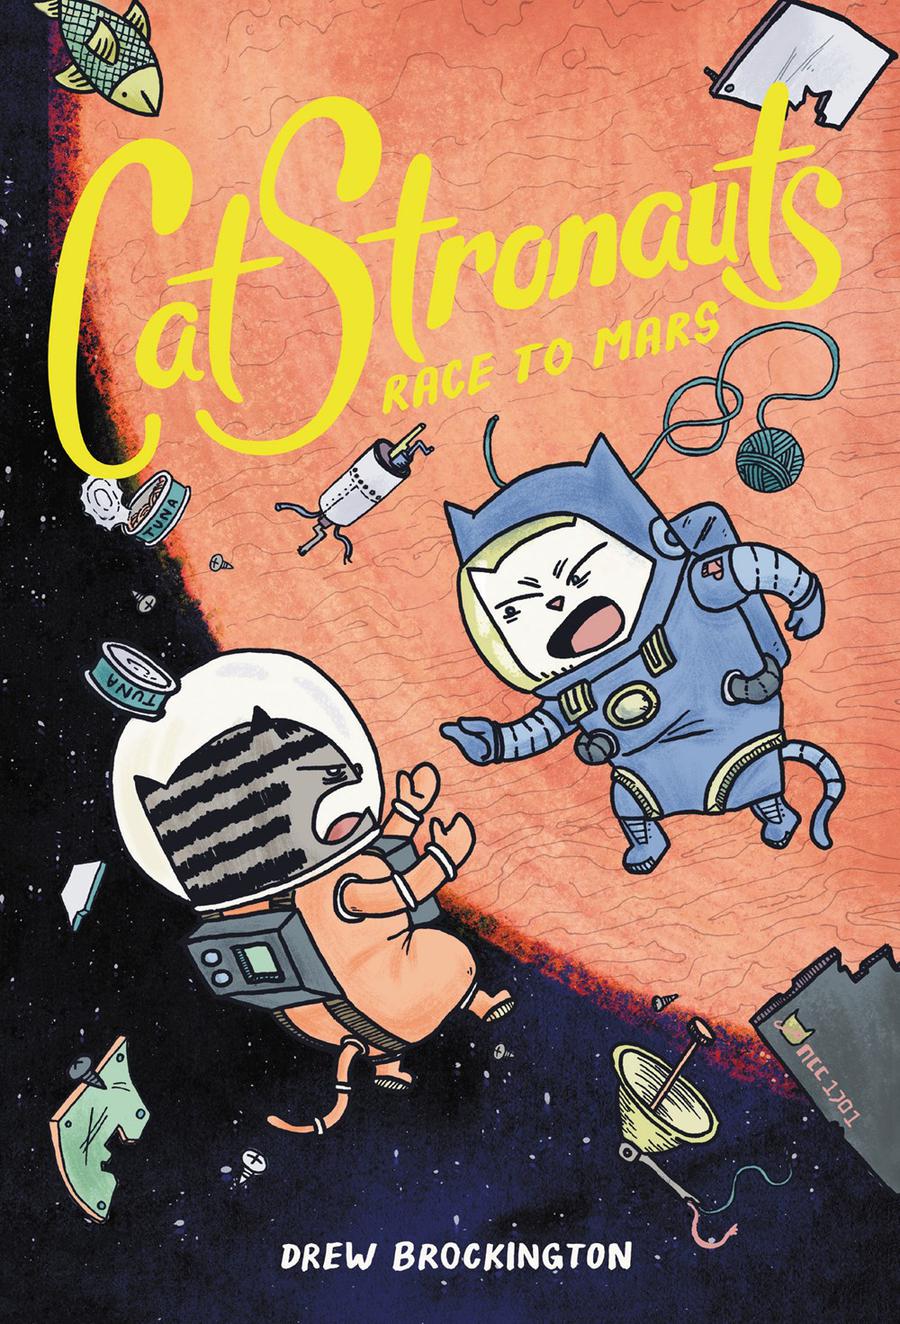 Catstronauts Vol 2 Race To Mars GN